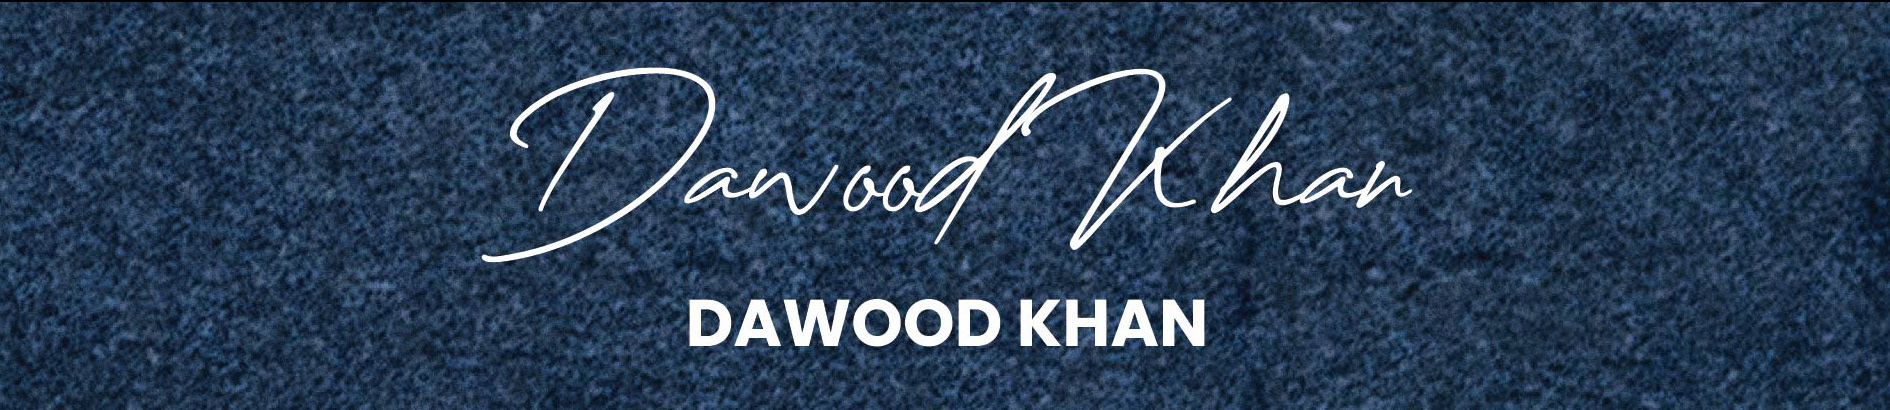 Muhammad Dawood Khans profilbanner